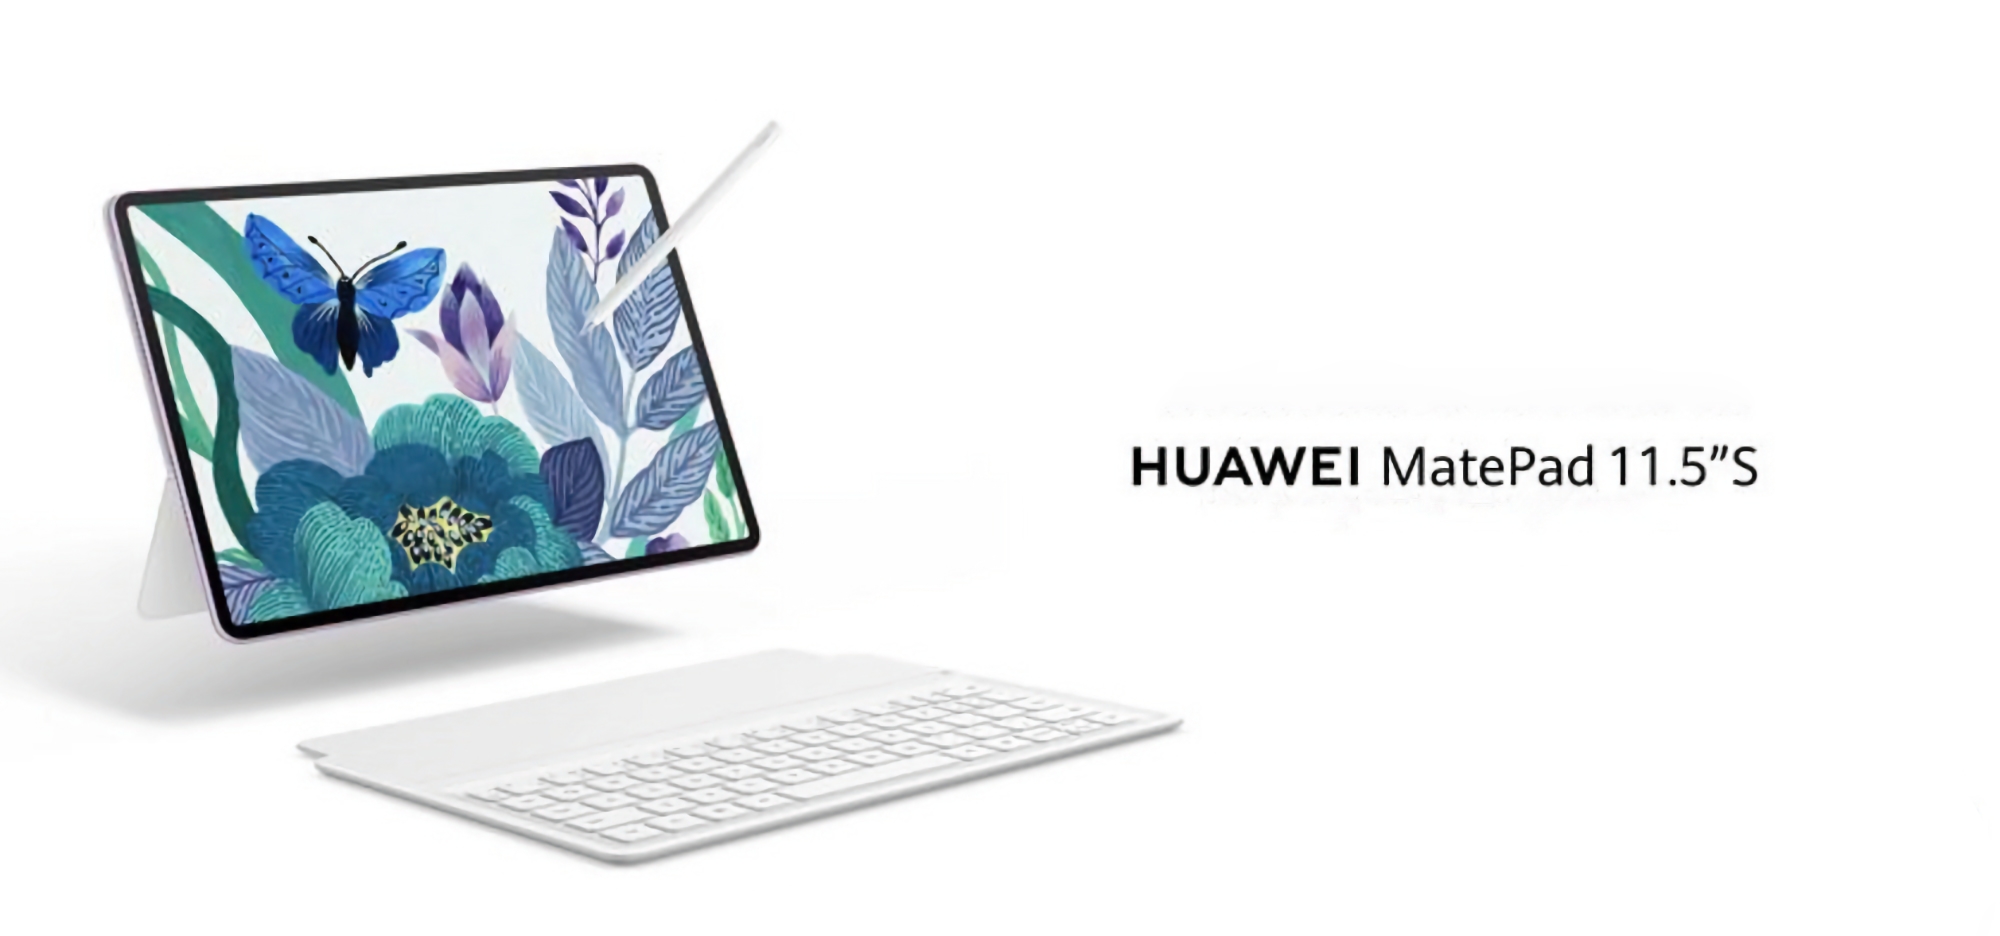 Huawei випустила перше оновлення системи для MatePad 11.5 S